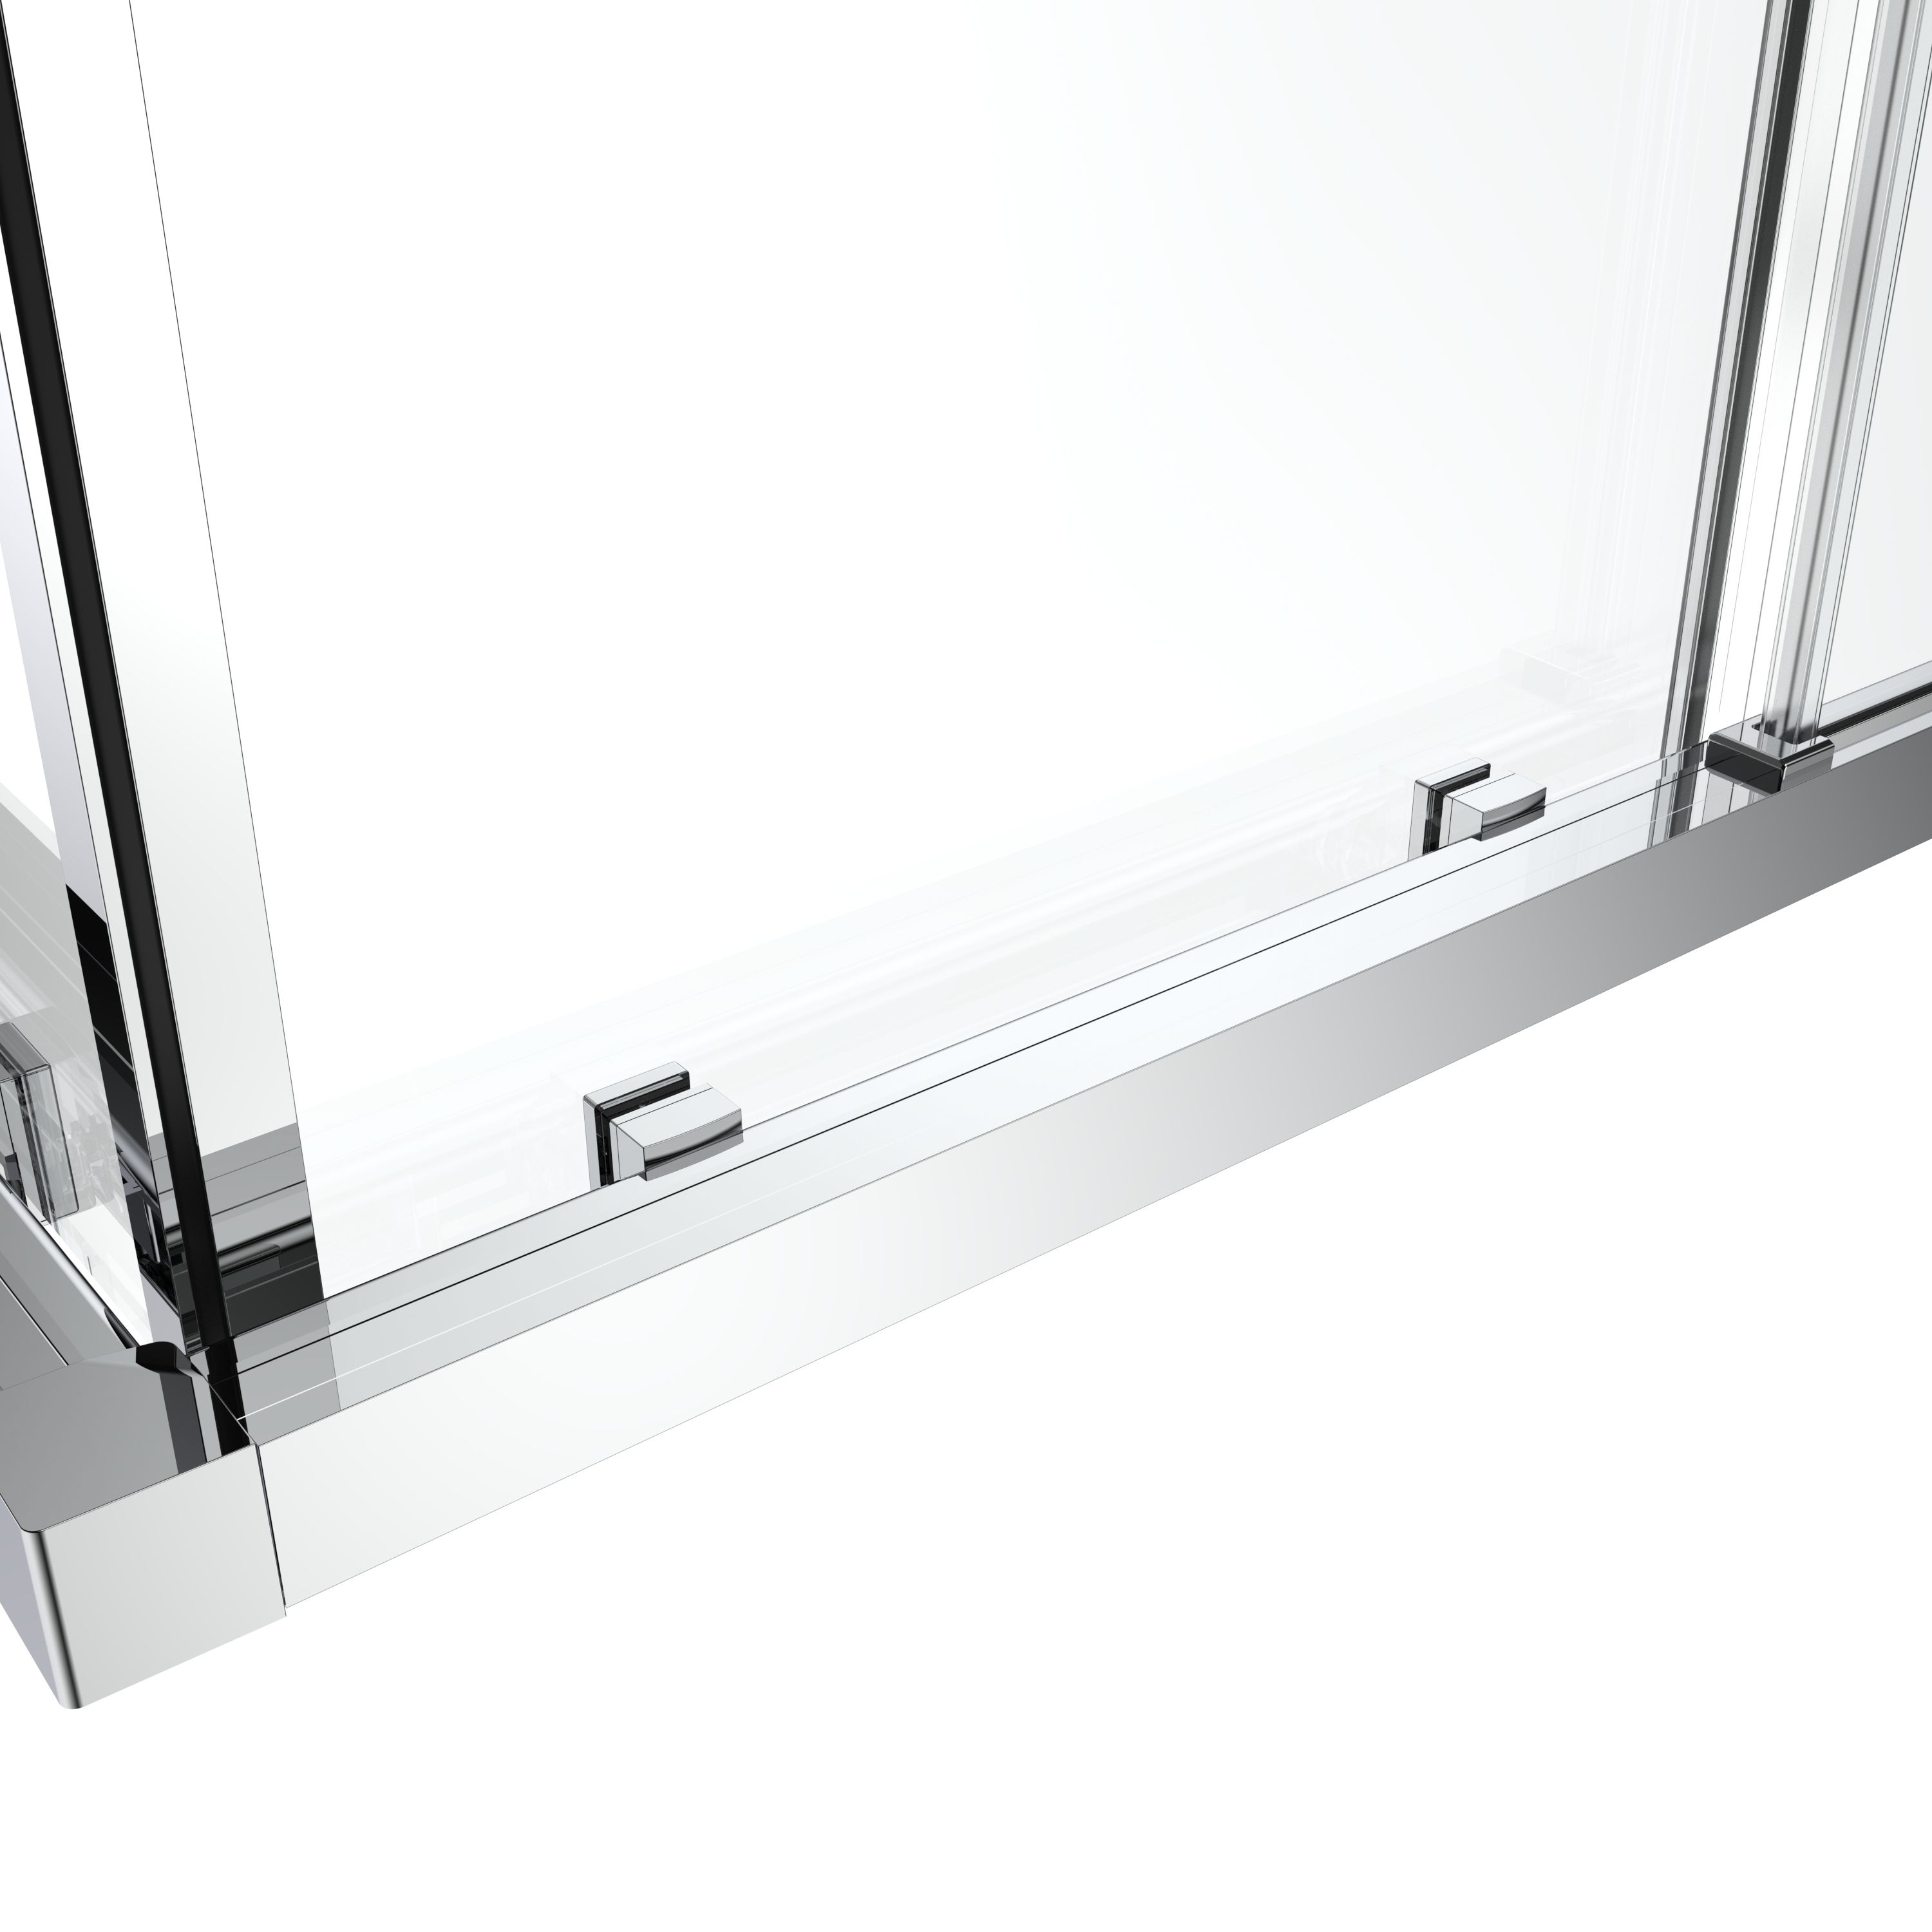 GoodHome Ledava Clear glass Chrome effect Rectangular Shower enclosure - Corner entry double sliding door (W)80cm (D)120cm